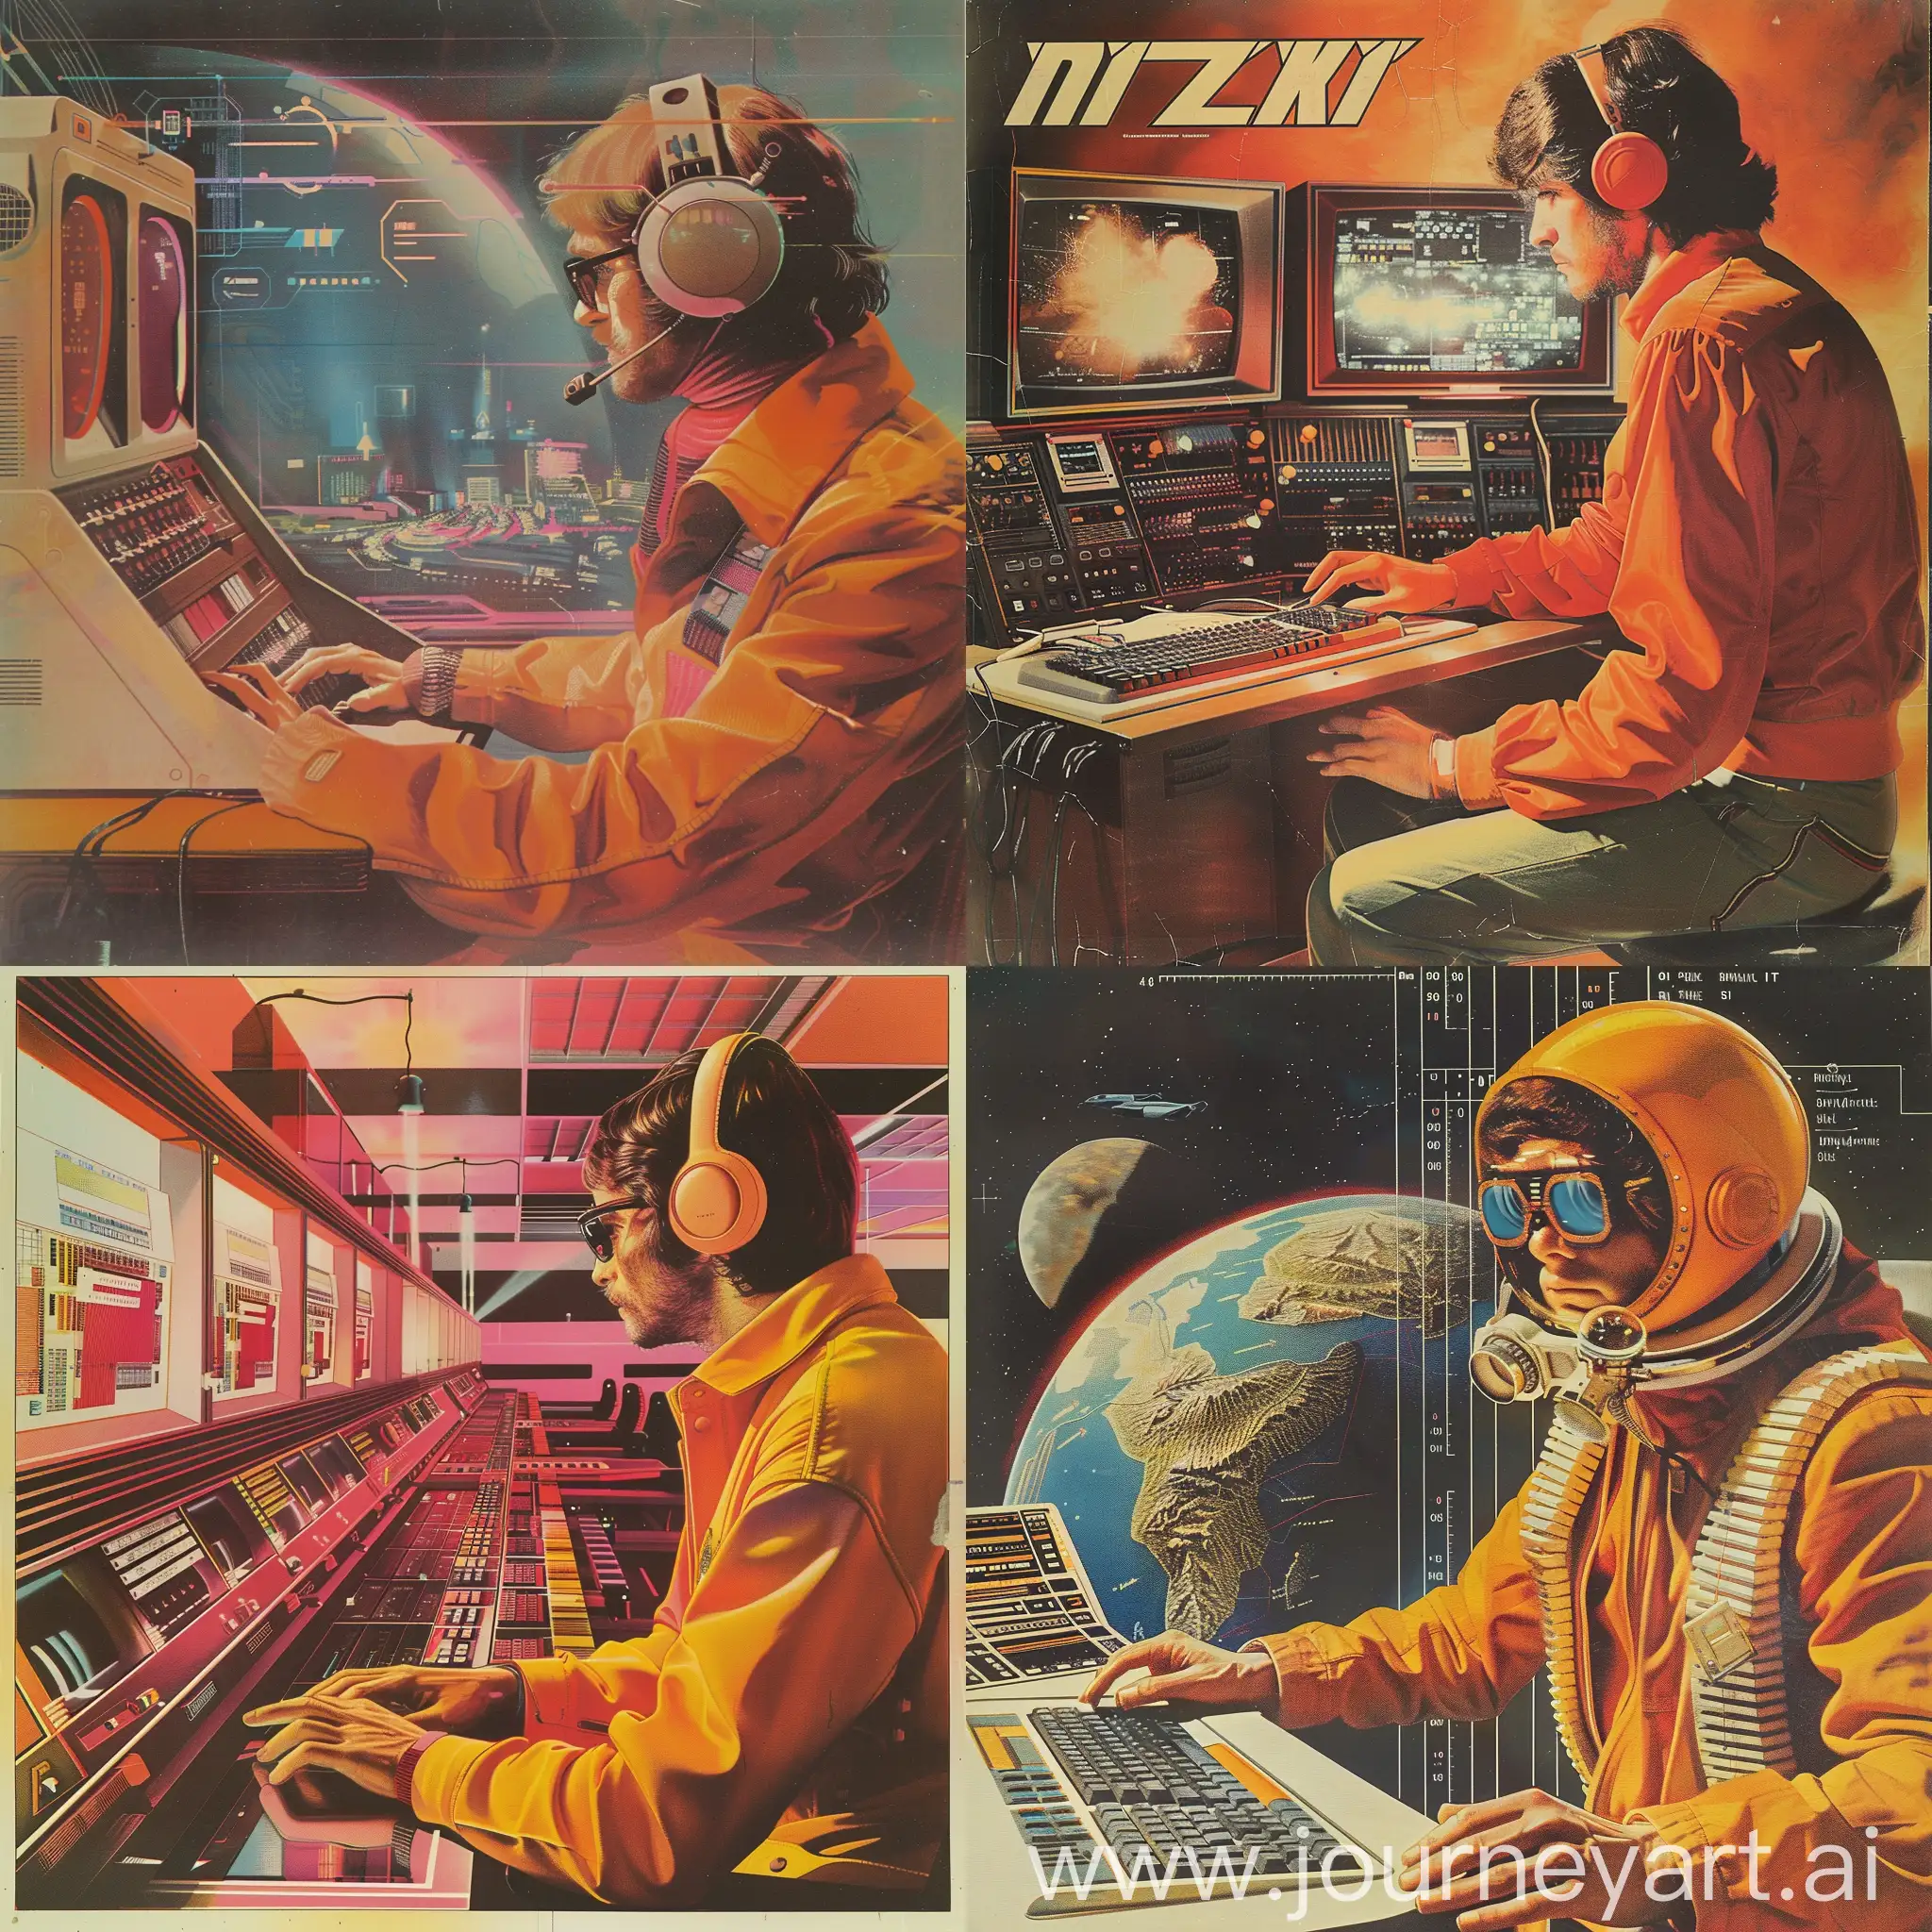 1970s-Programmer-Embracing-Futuristic-Technology-in-MiyazakiInspired-Style